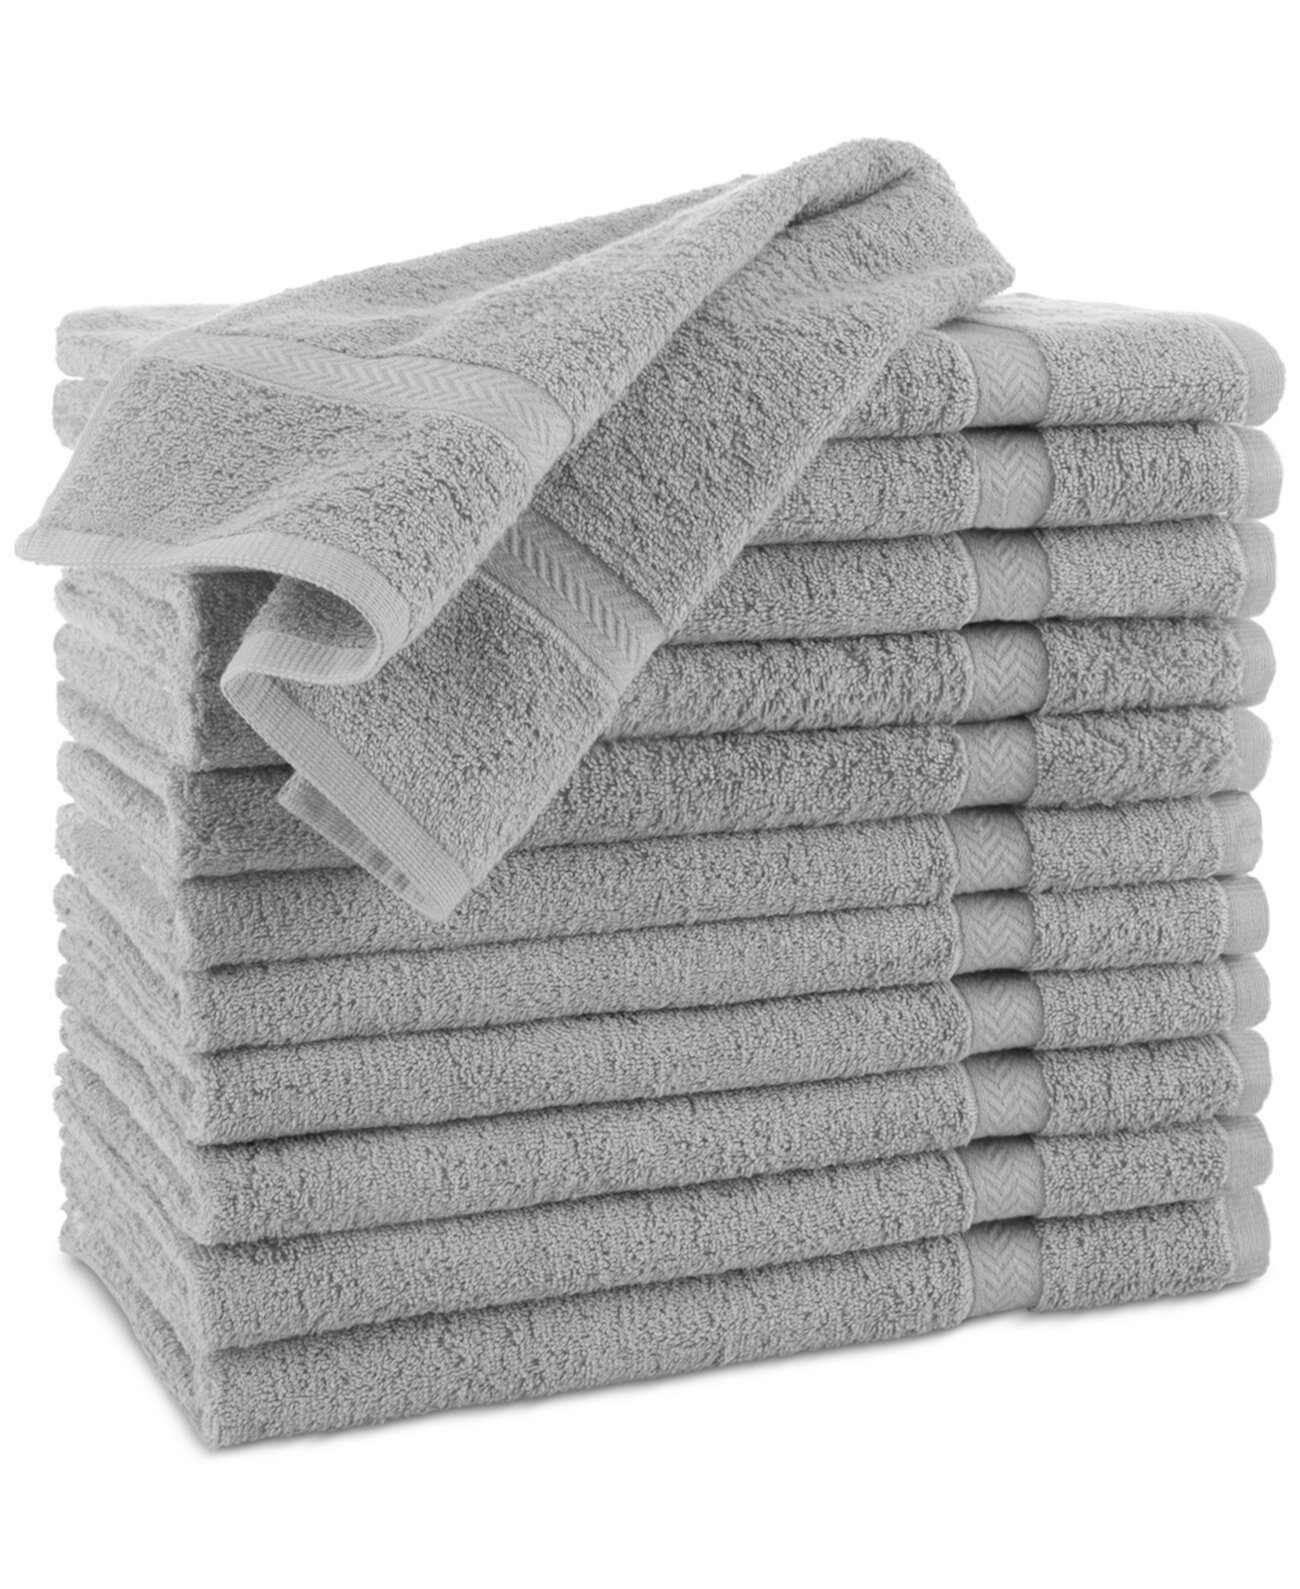 Натуральные полотенца. Набор полотенец для рук. Твердое полотенце. Полотенце 12. Pn08848b полотенце.